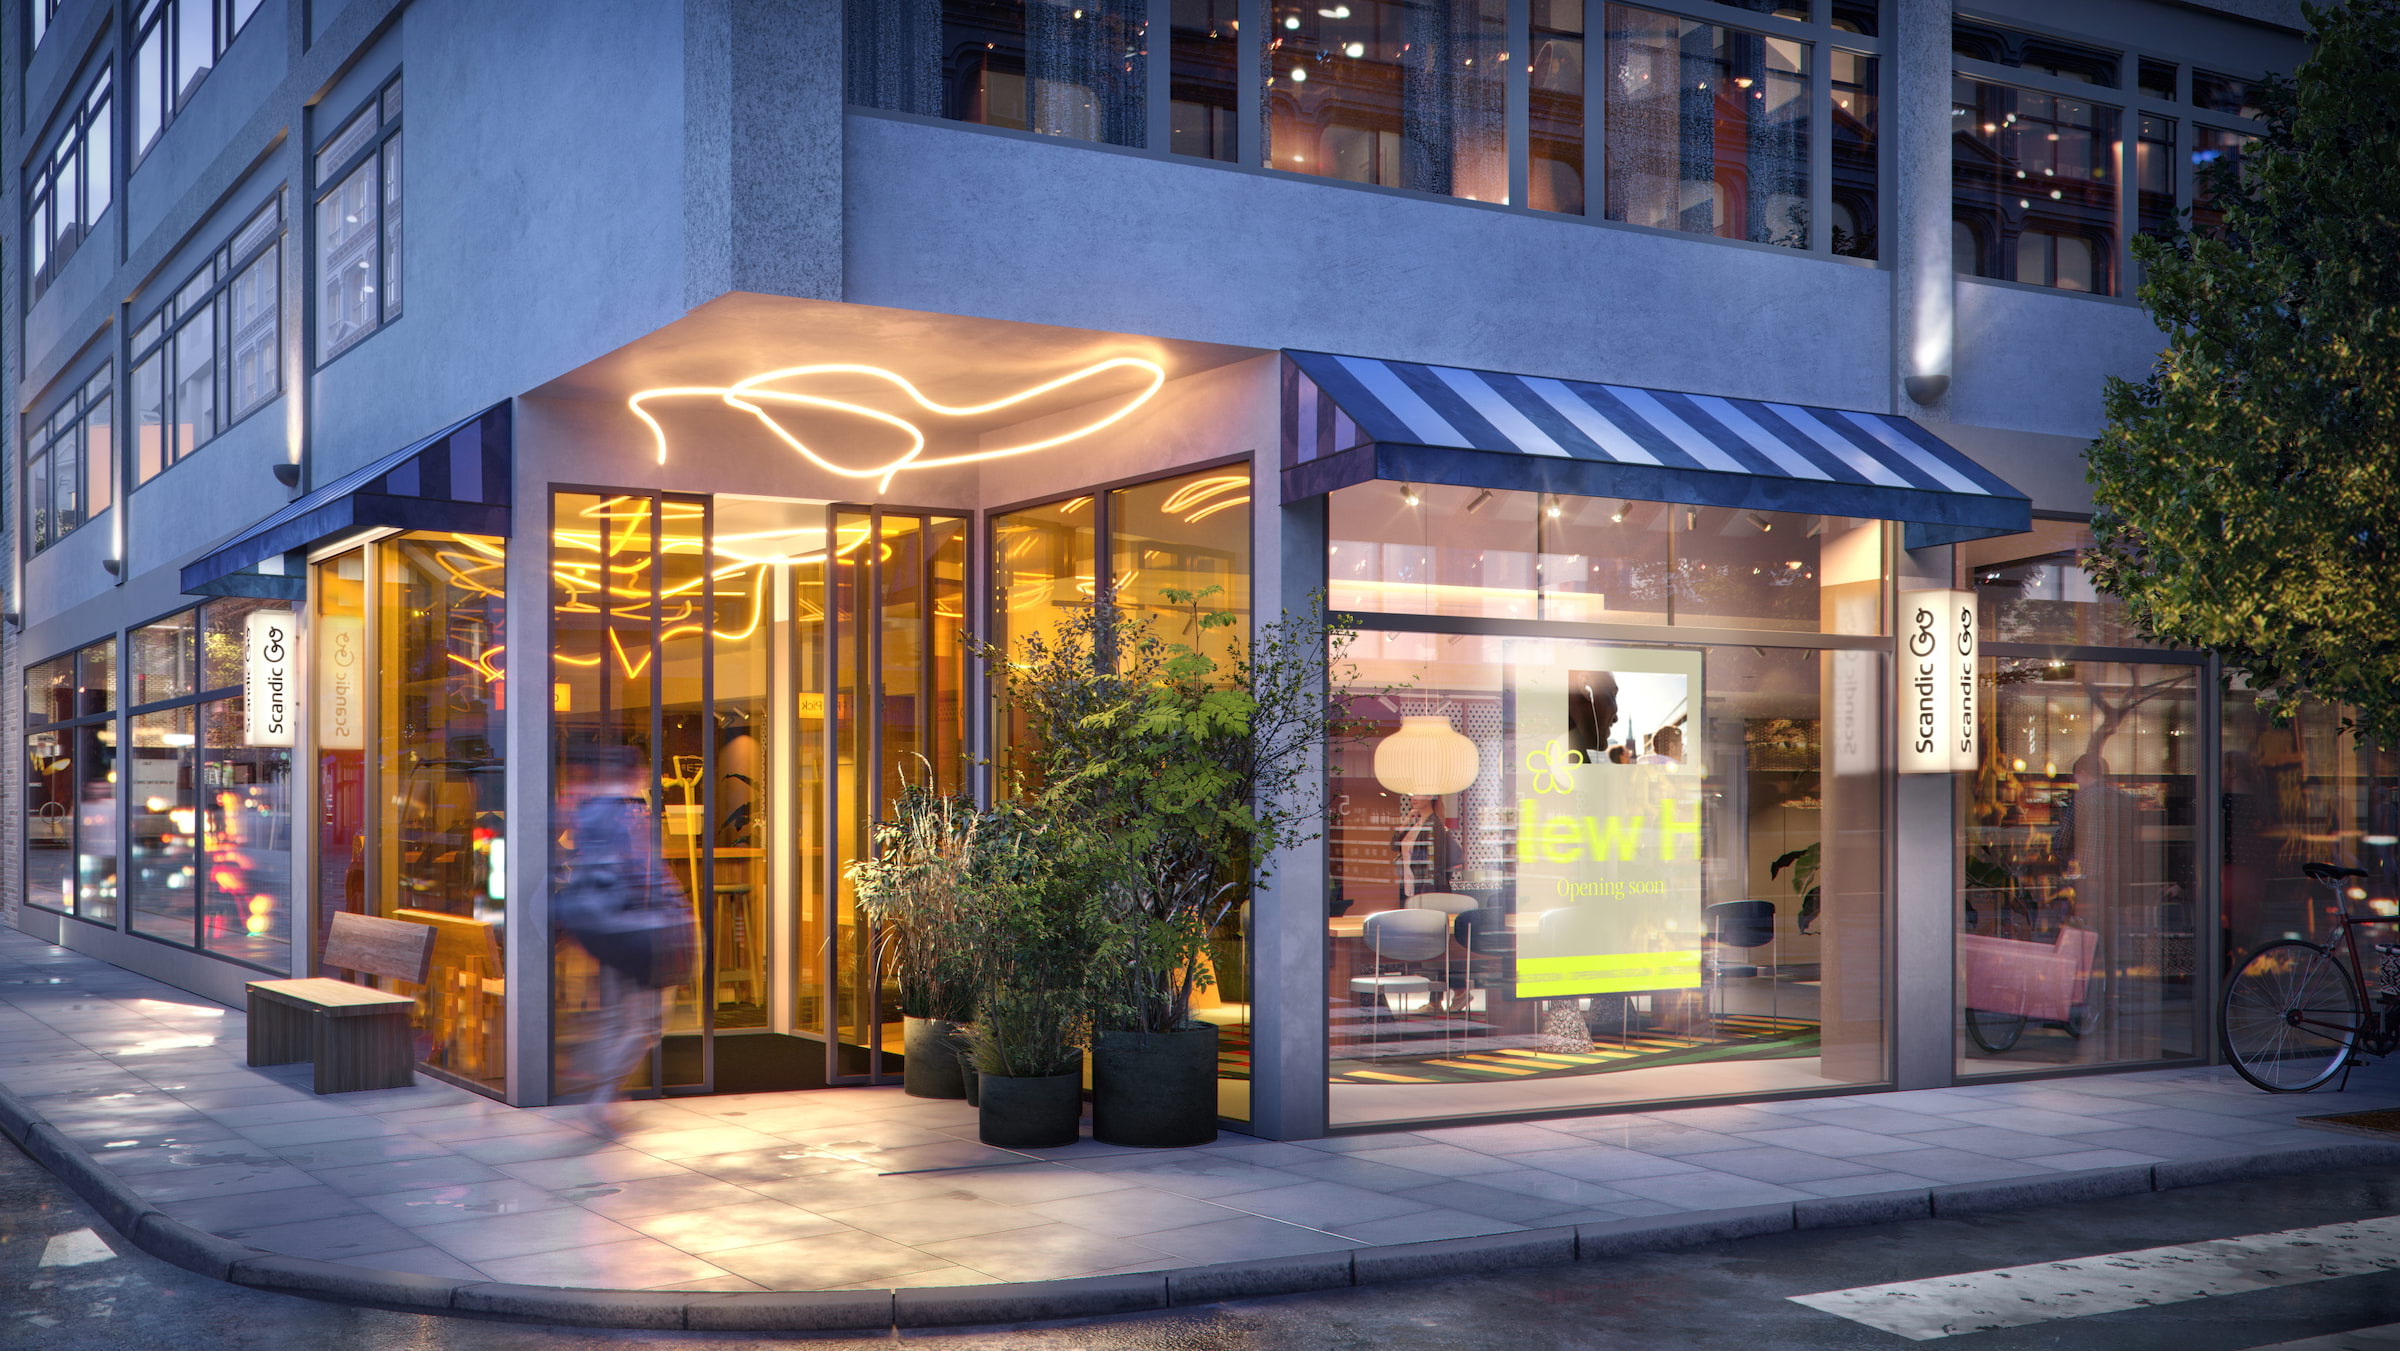 Scandic lanserar nytt hotellkoncept – öppnar i city